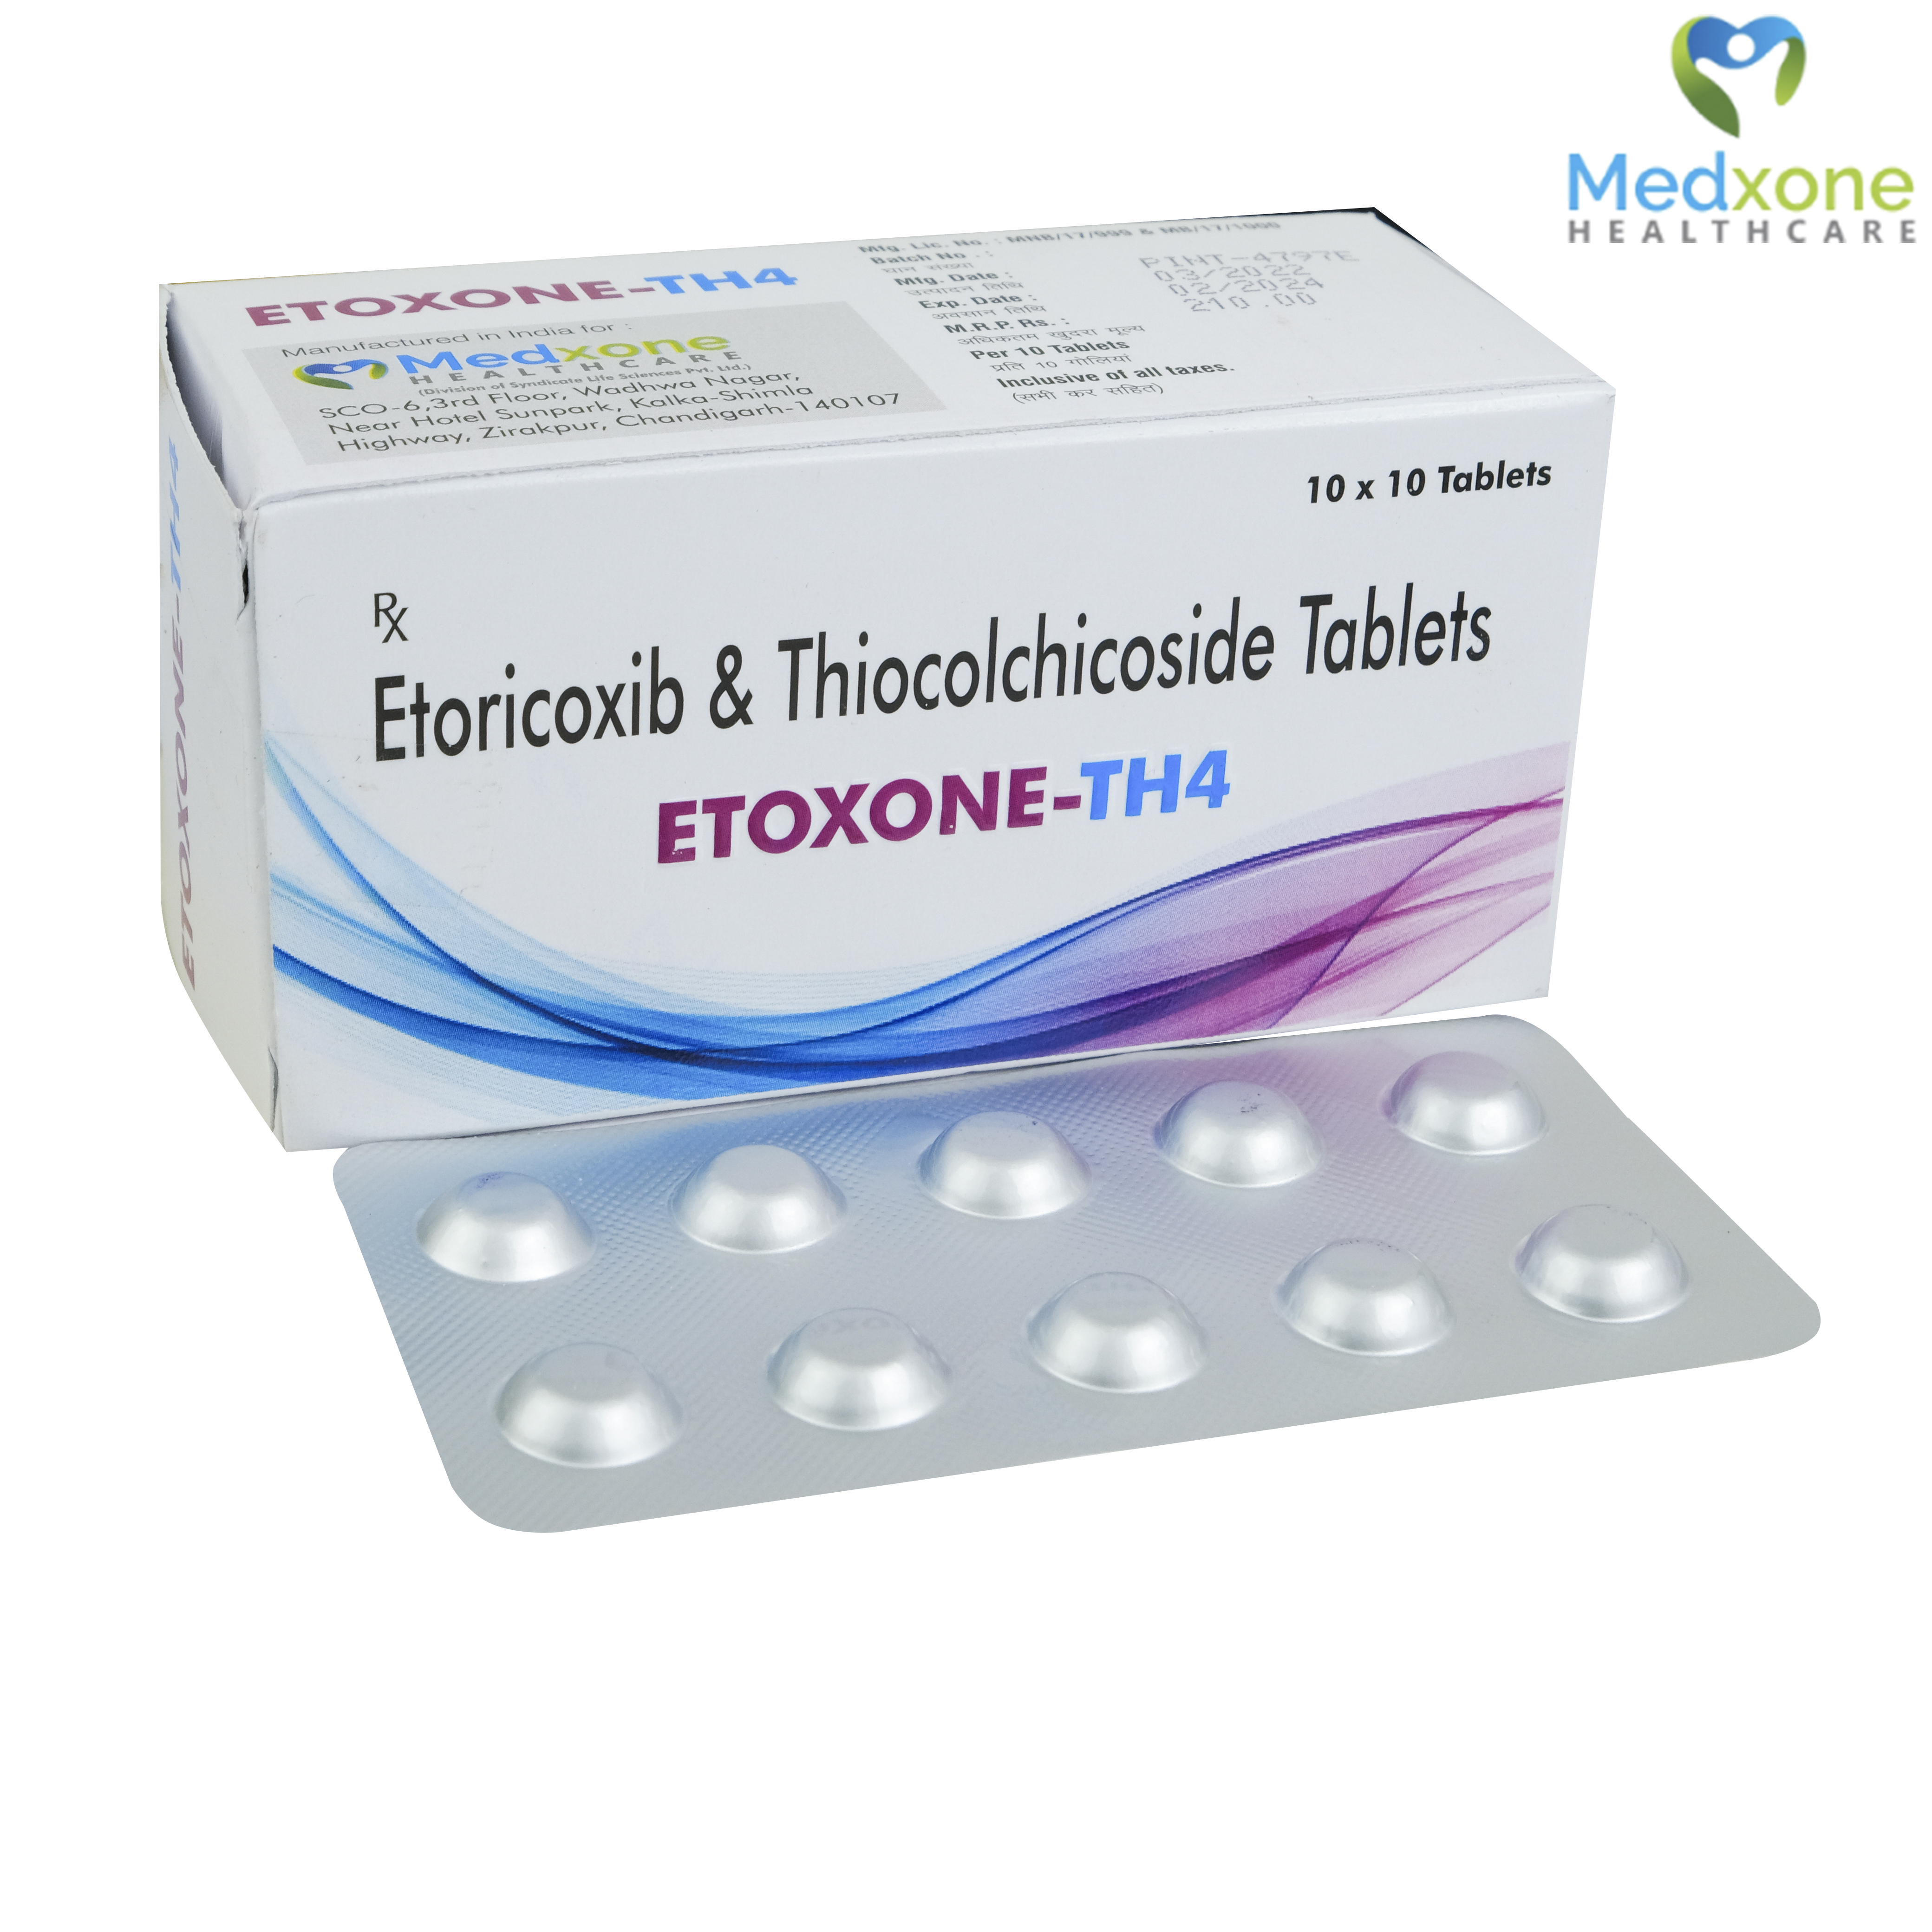 "Each film coated tablet contains: Etoricoxib 60mg + Thiocolchicoside 4mg"